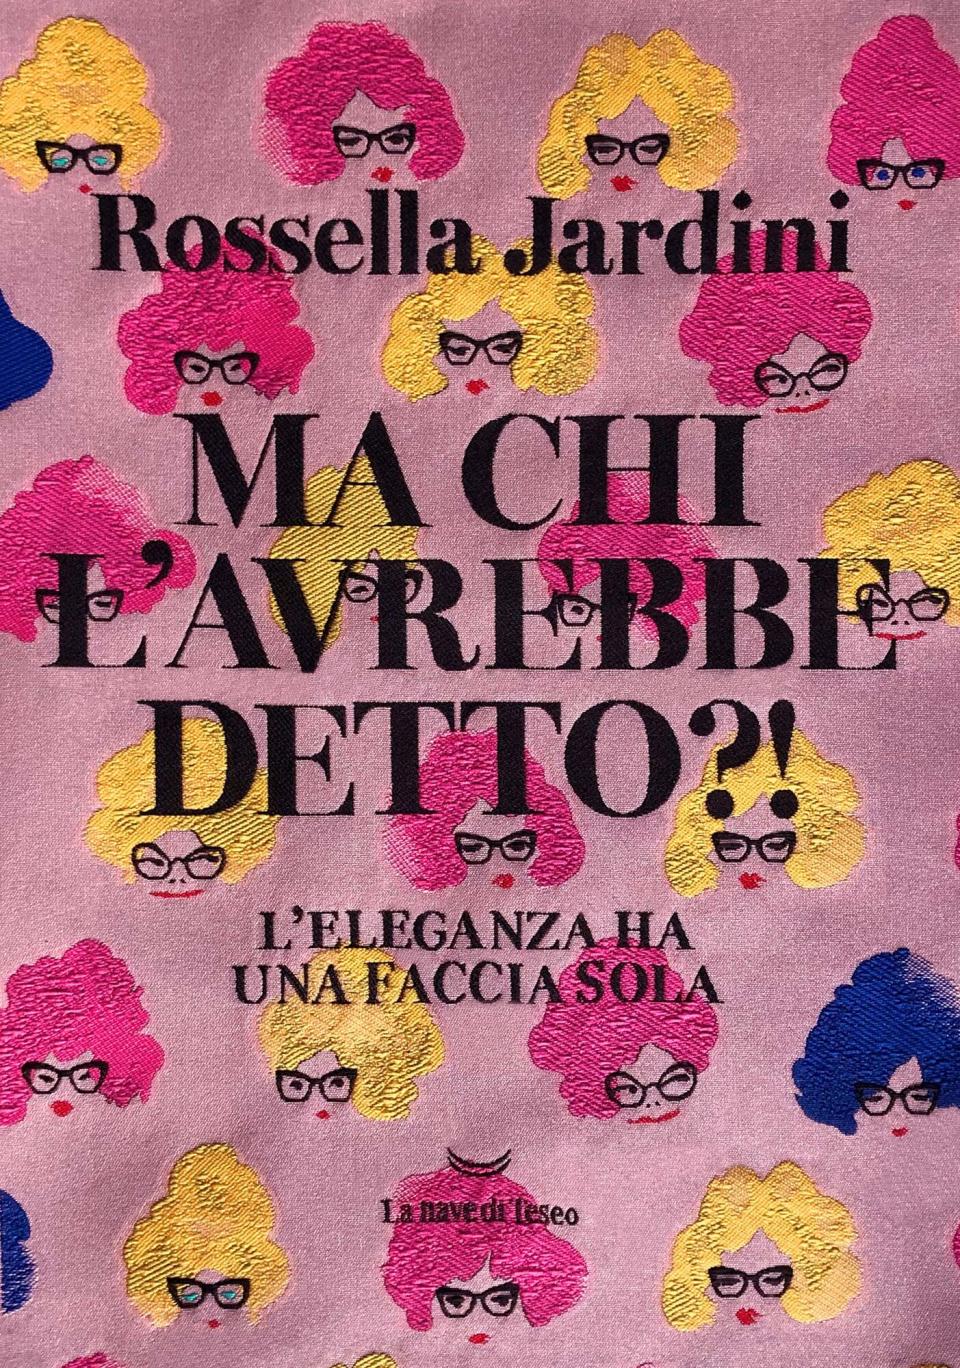 Former Moschino Creative director Rossella Jardini's biography3